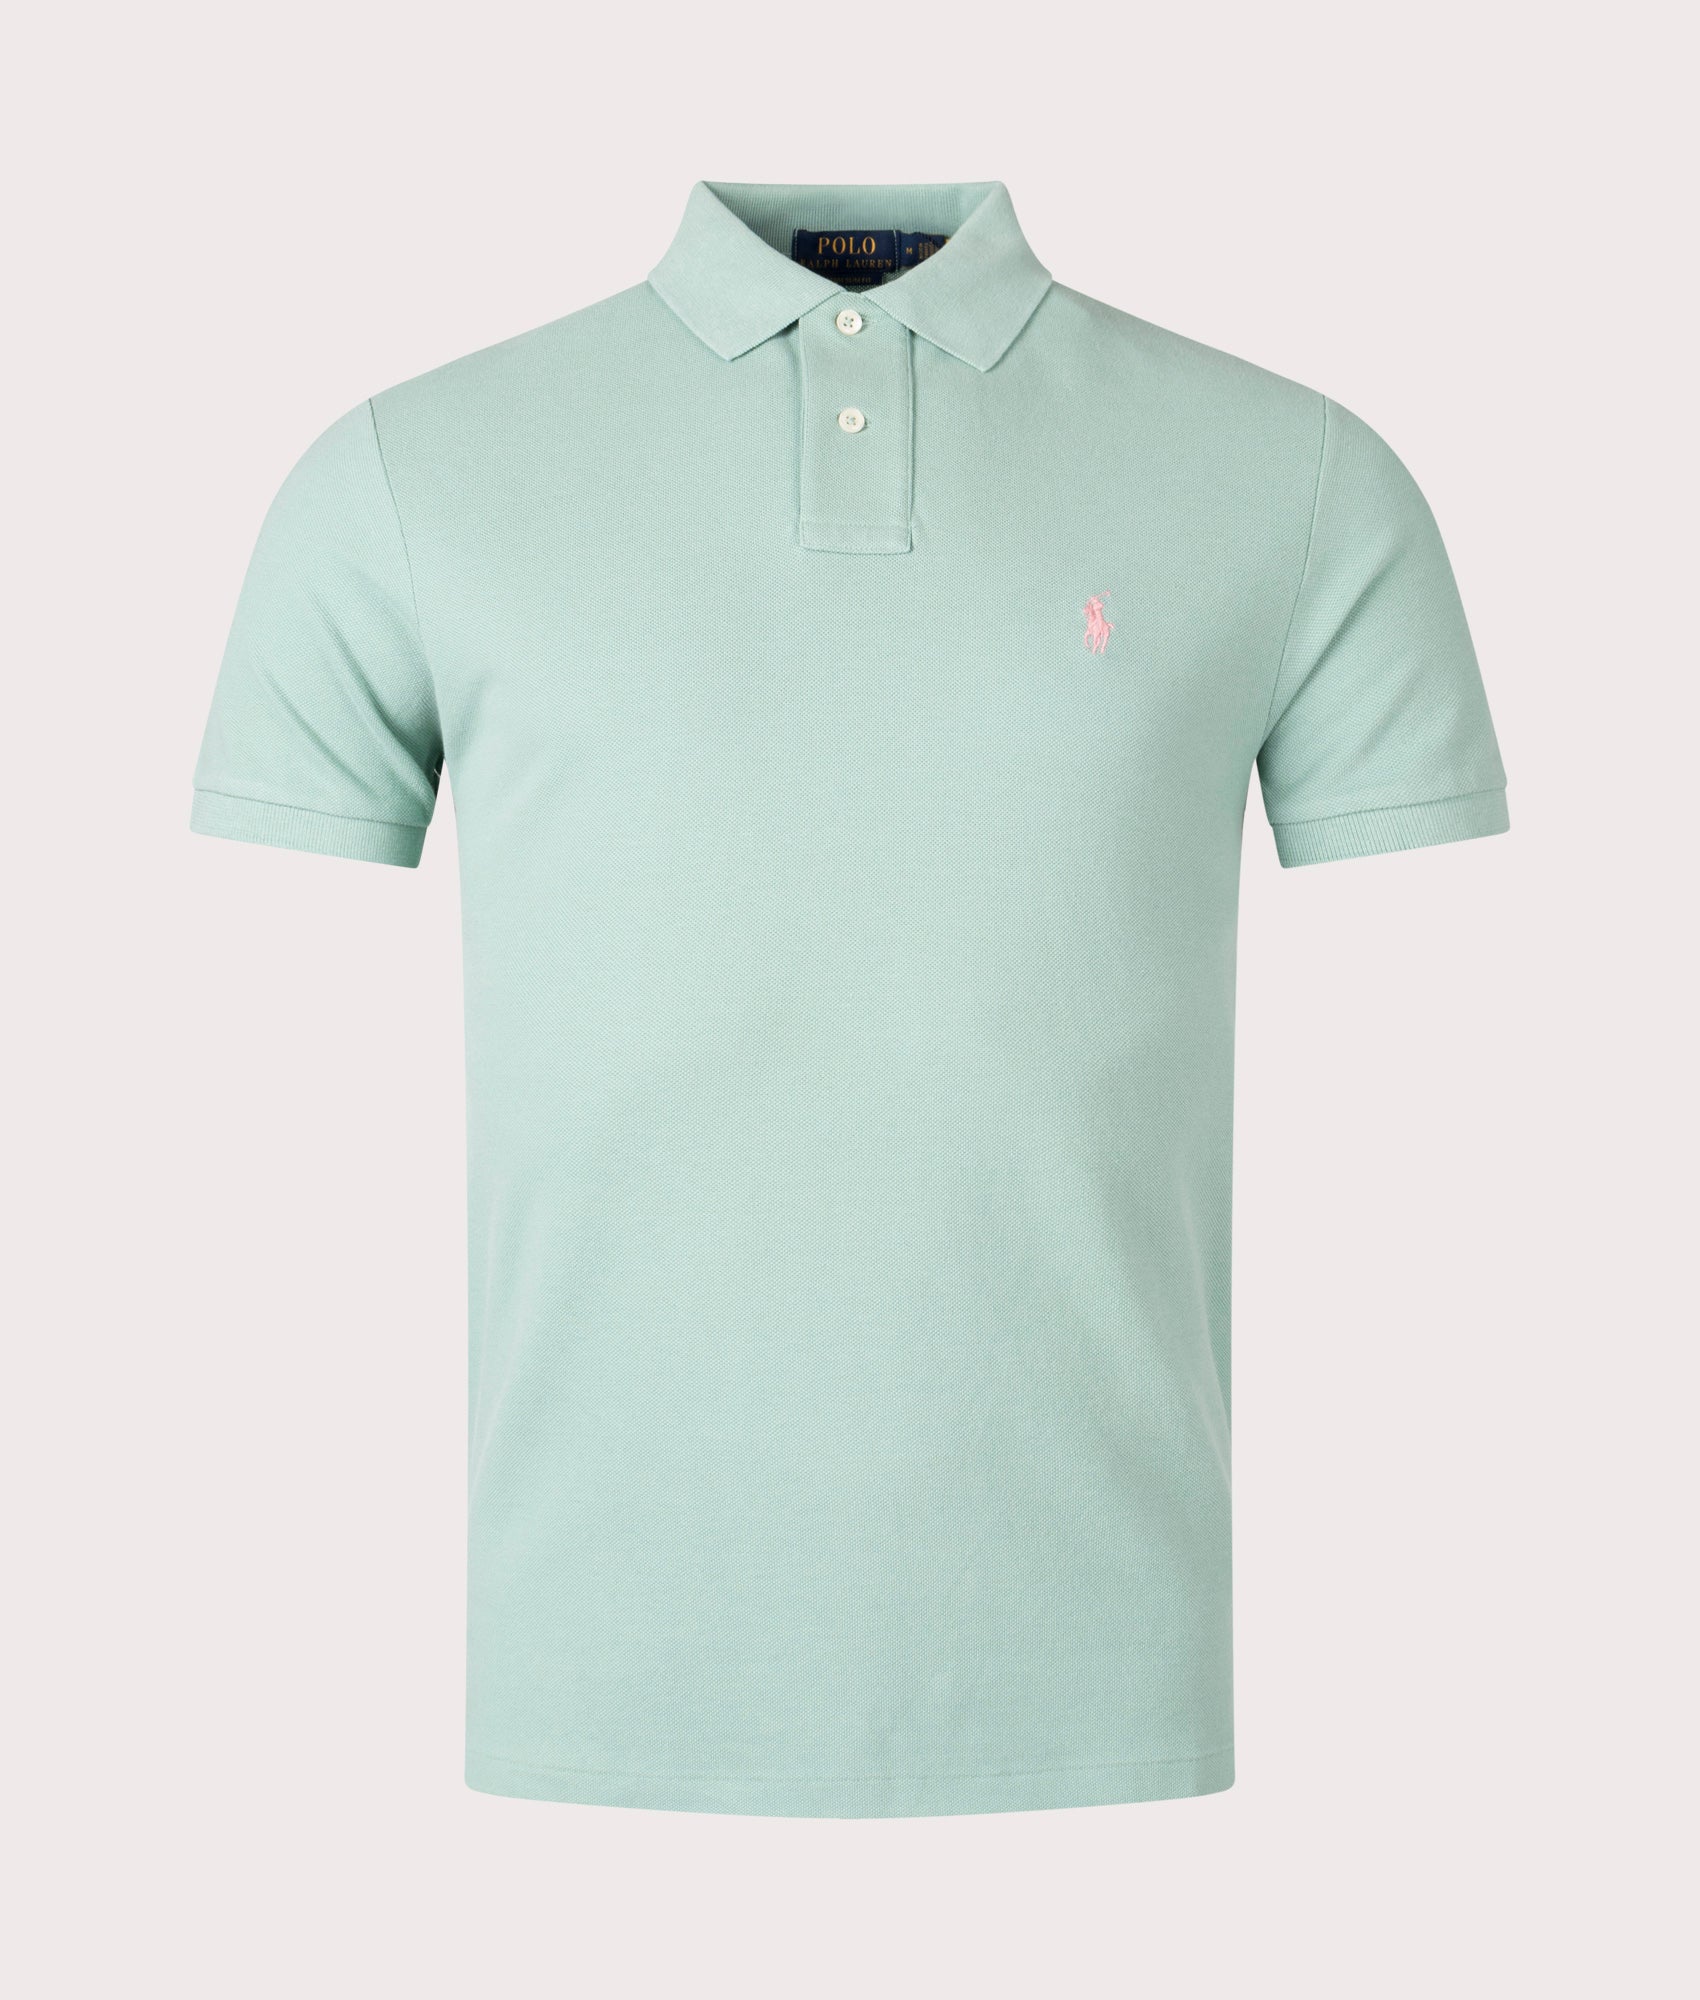 Mesh Polo Shirt Essex Green | Polo Ralph Lauren | EQVVS